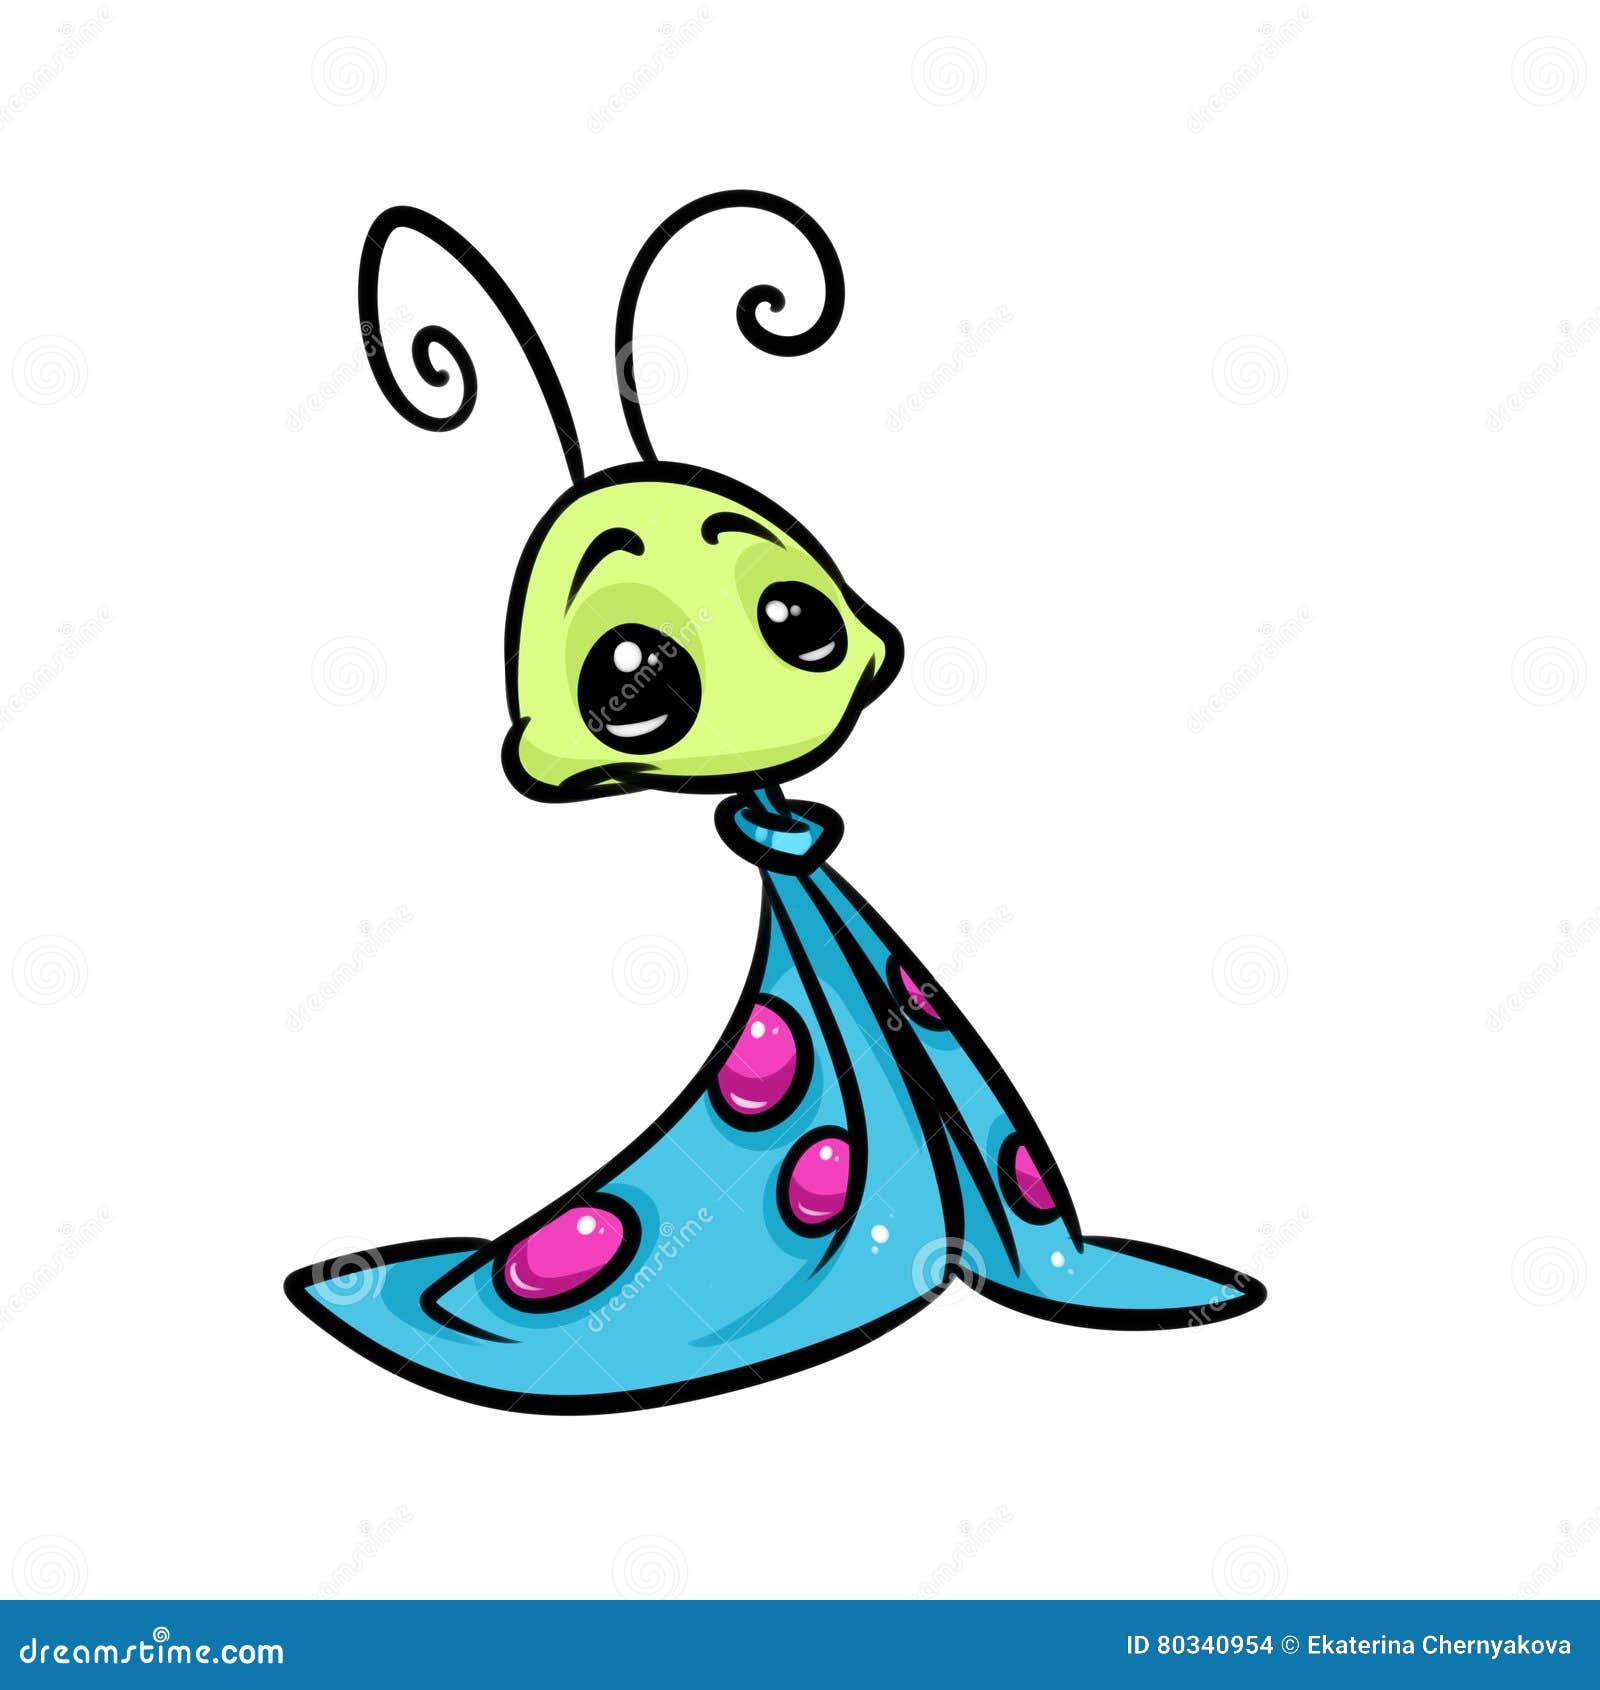 Insect cricket cartoon stock illustration. Illustration of animal - 80340954